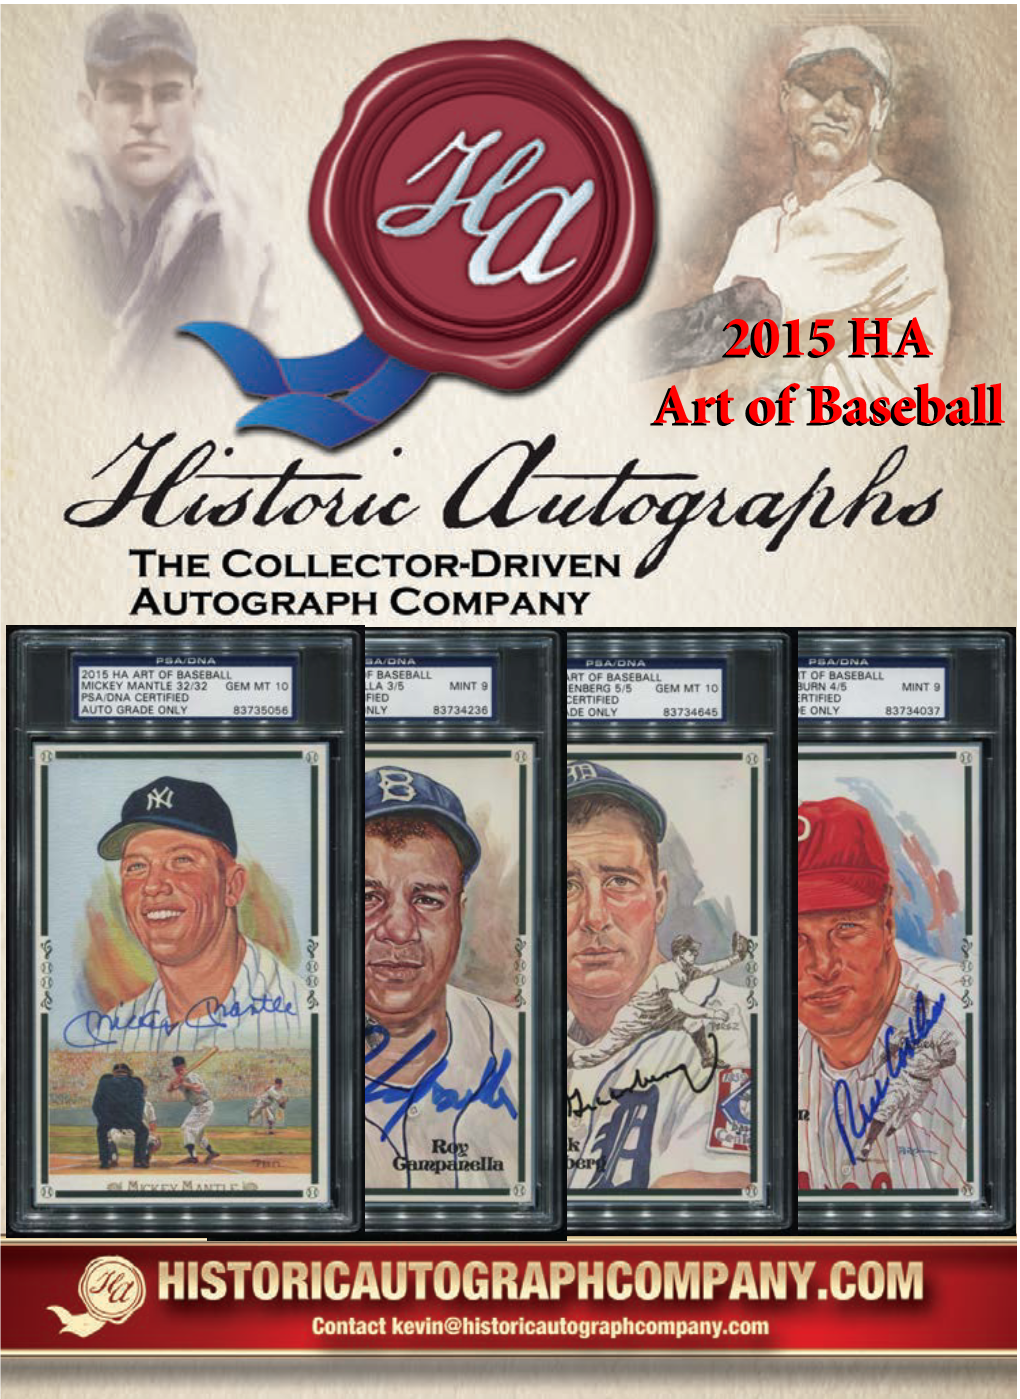 2015 Historic Autographs - Art of Baseball CONTENT HIGHLIGHTS